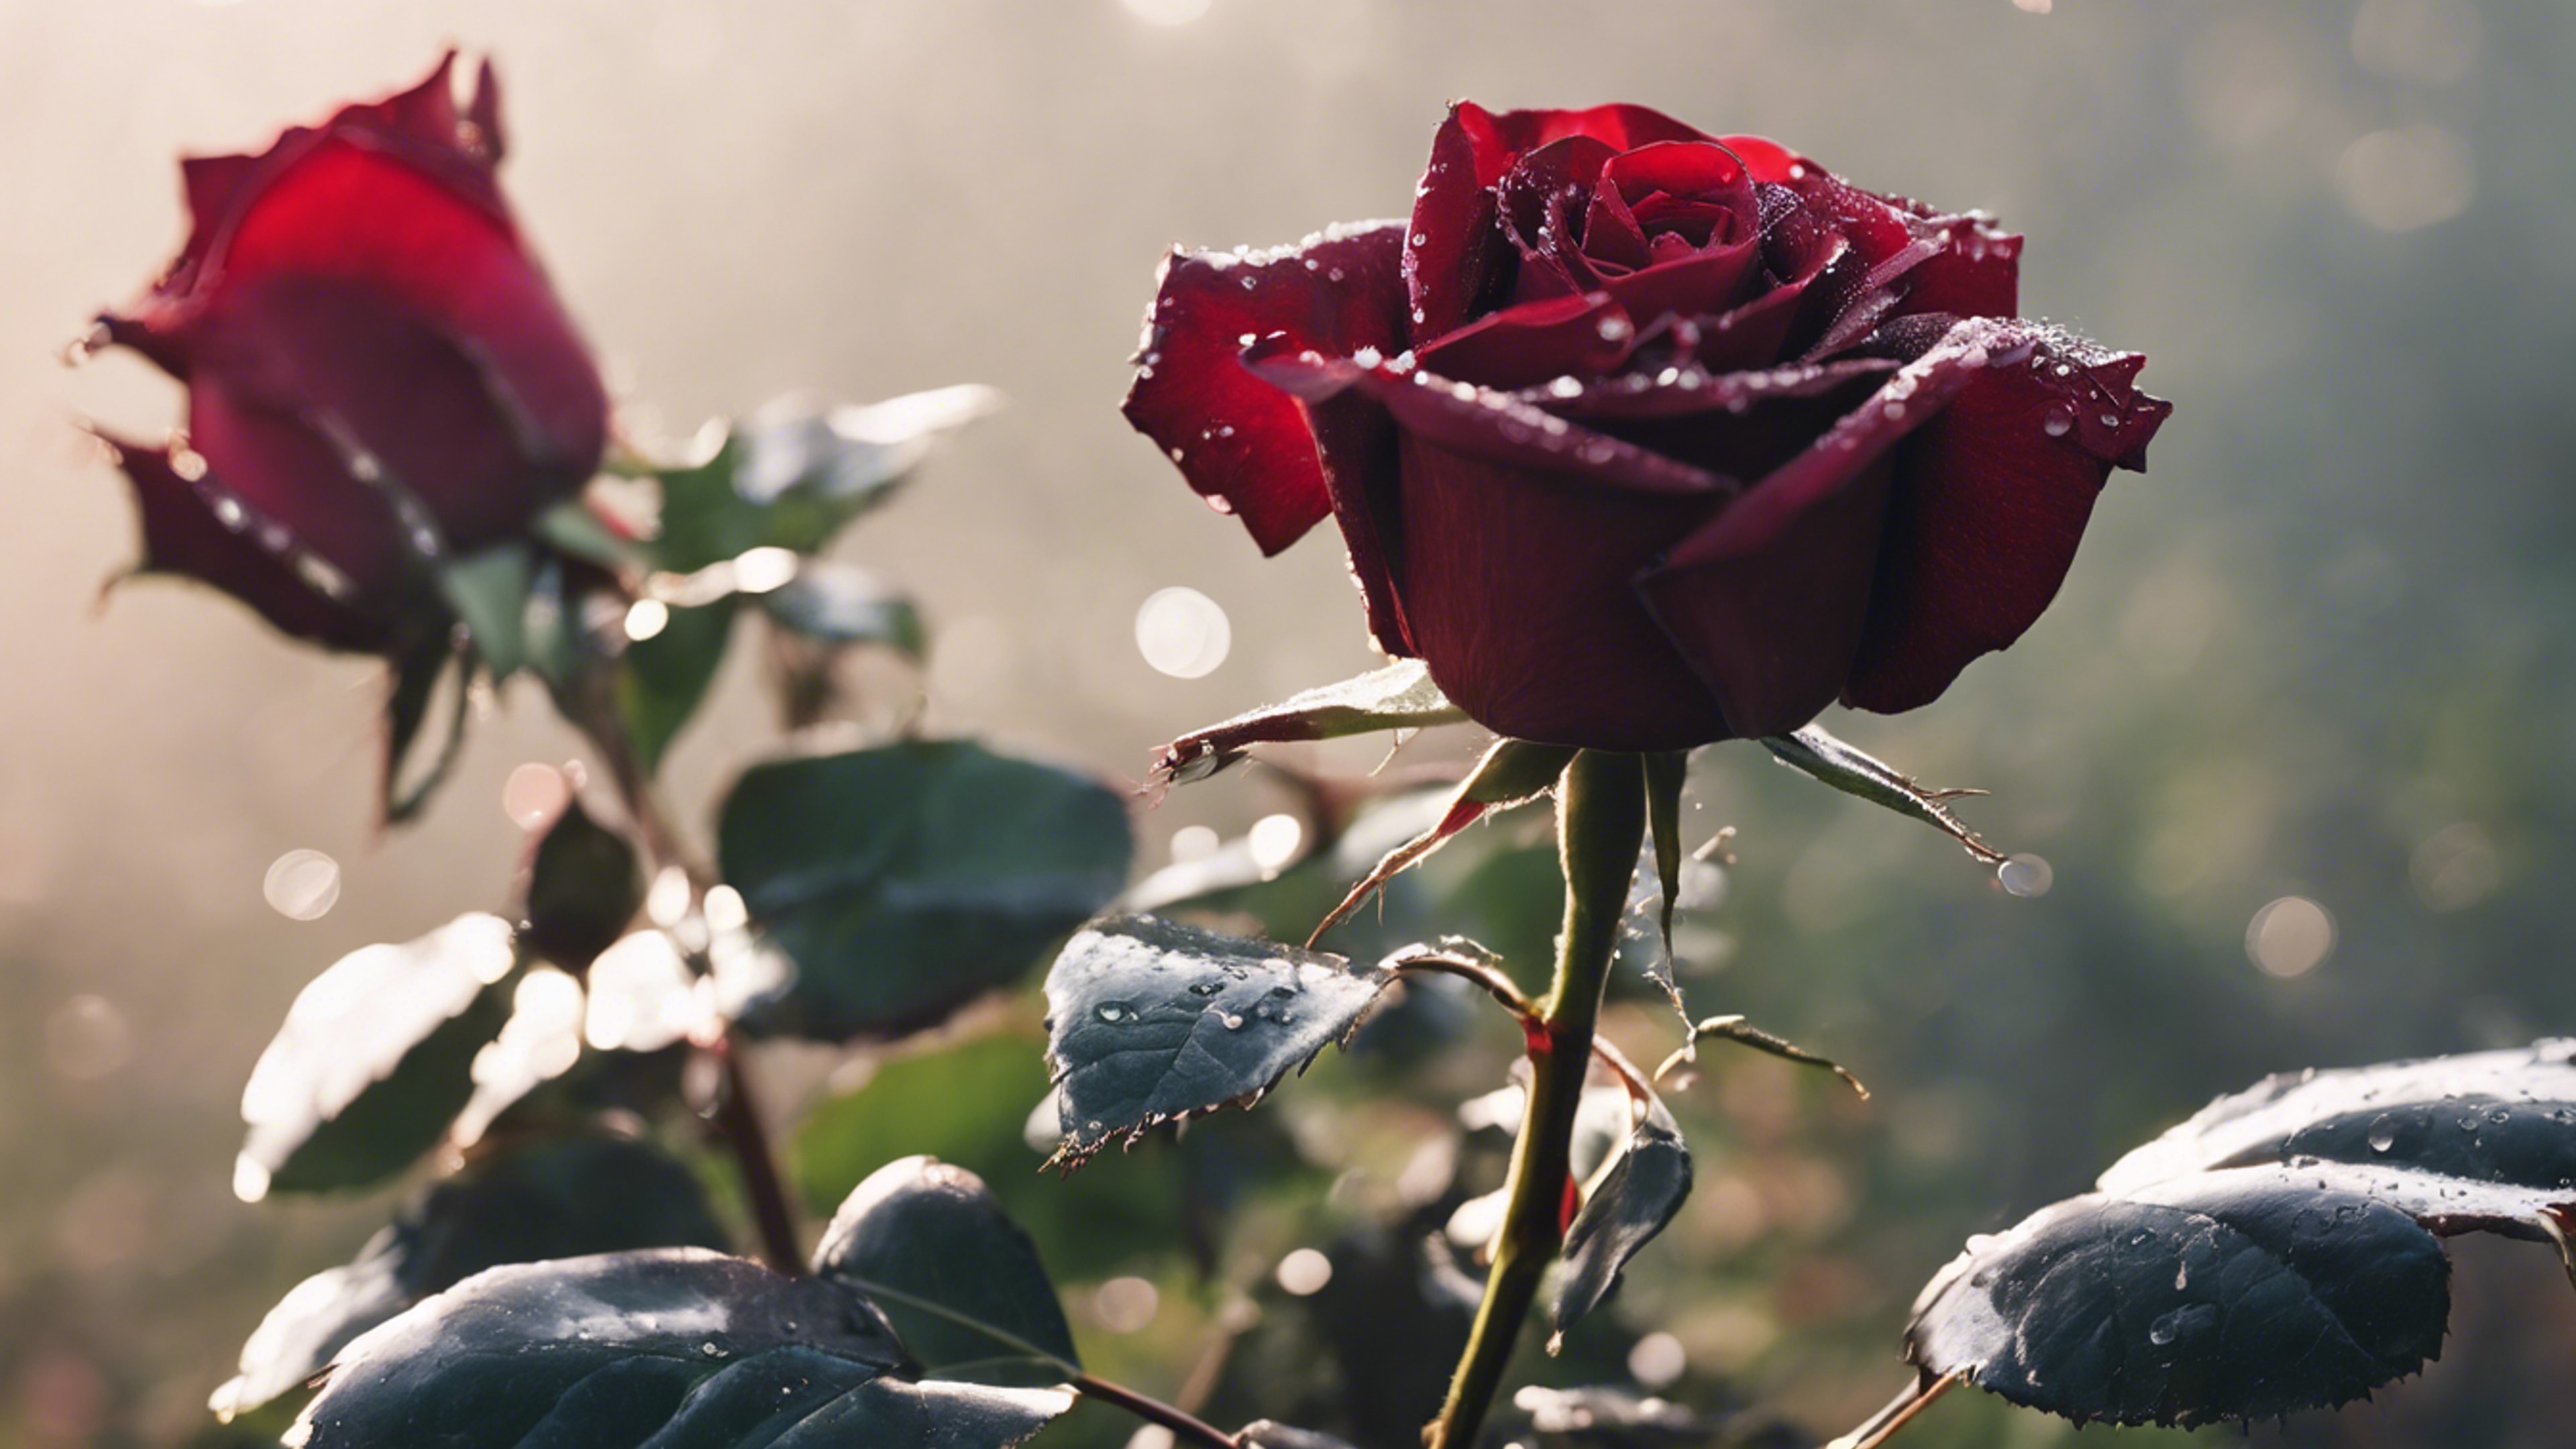 A lush dark red rose in full bloom, glistening with morning dew. Tapeta[3308270db75d4dd78aa2]